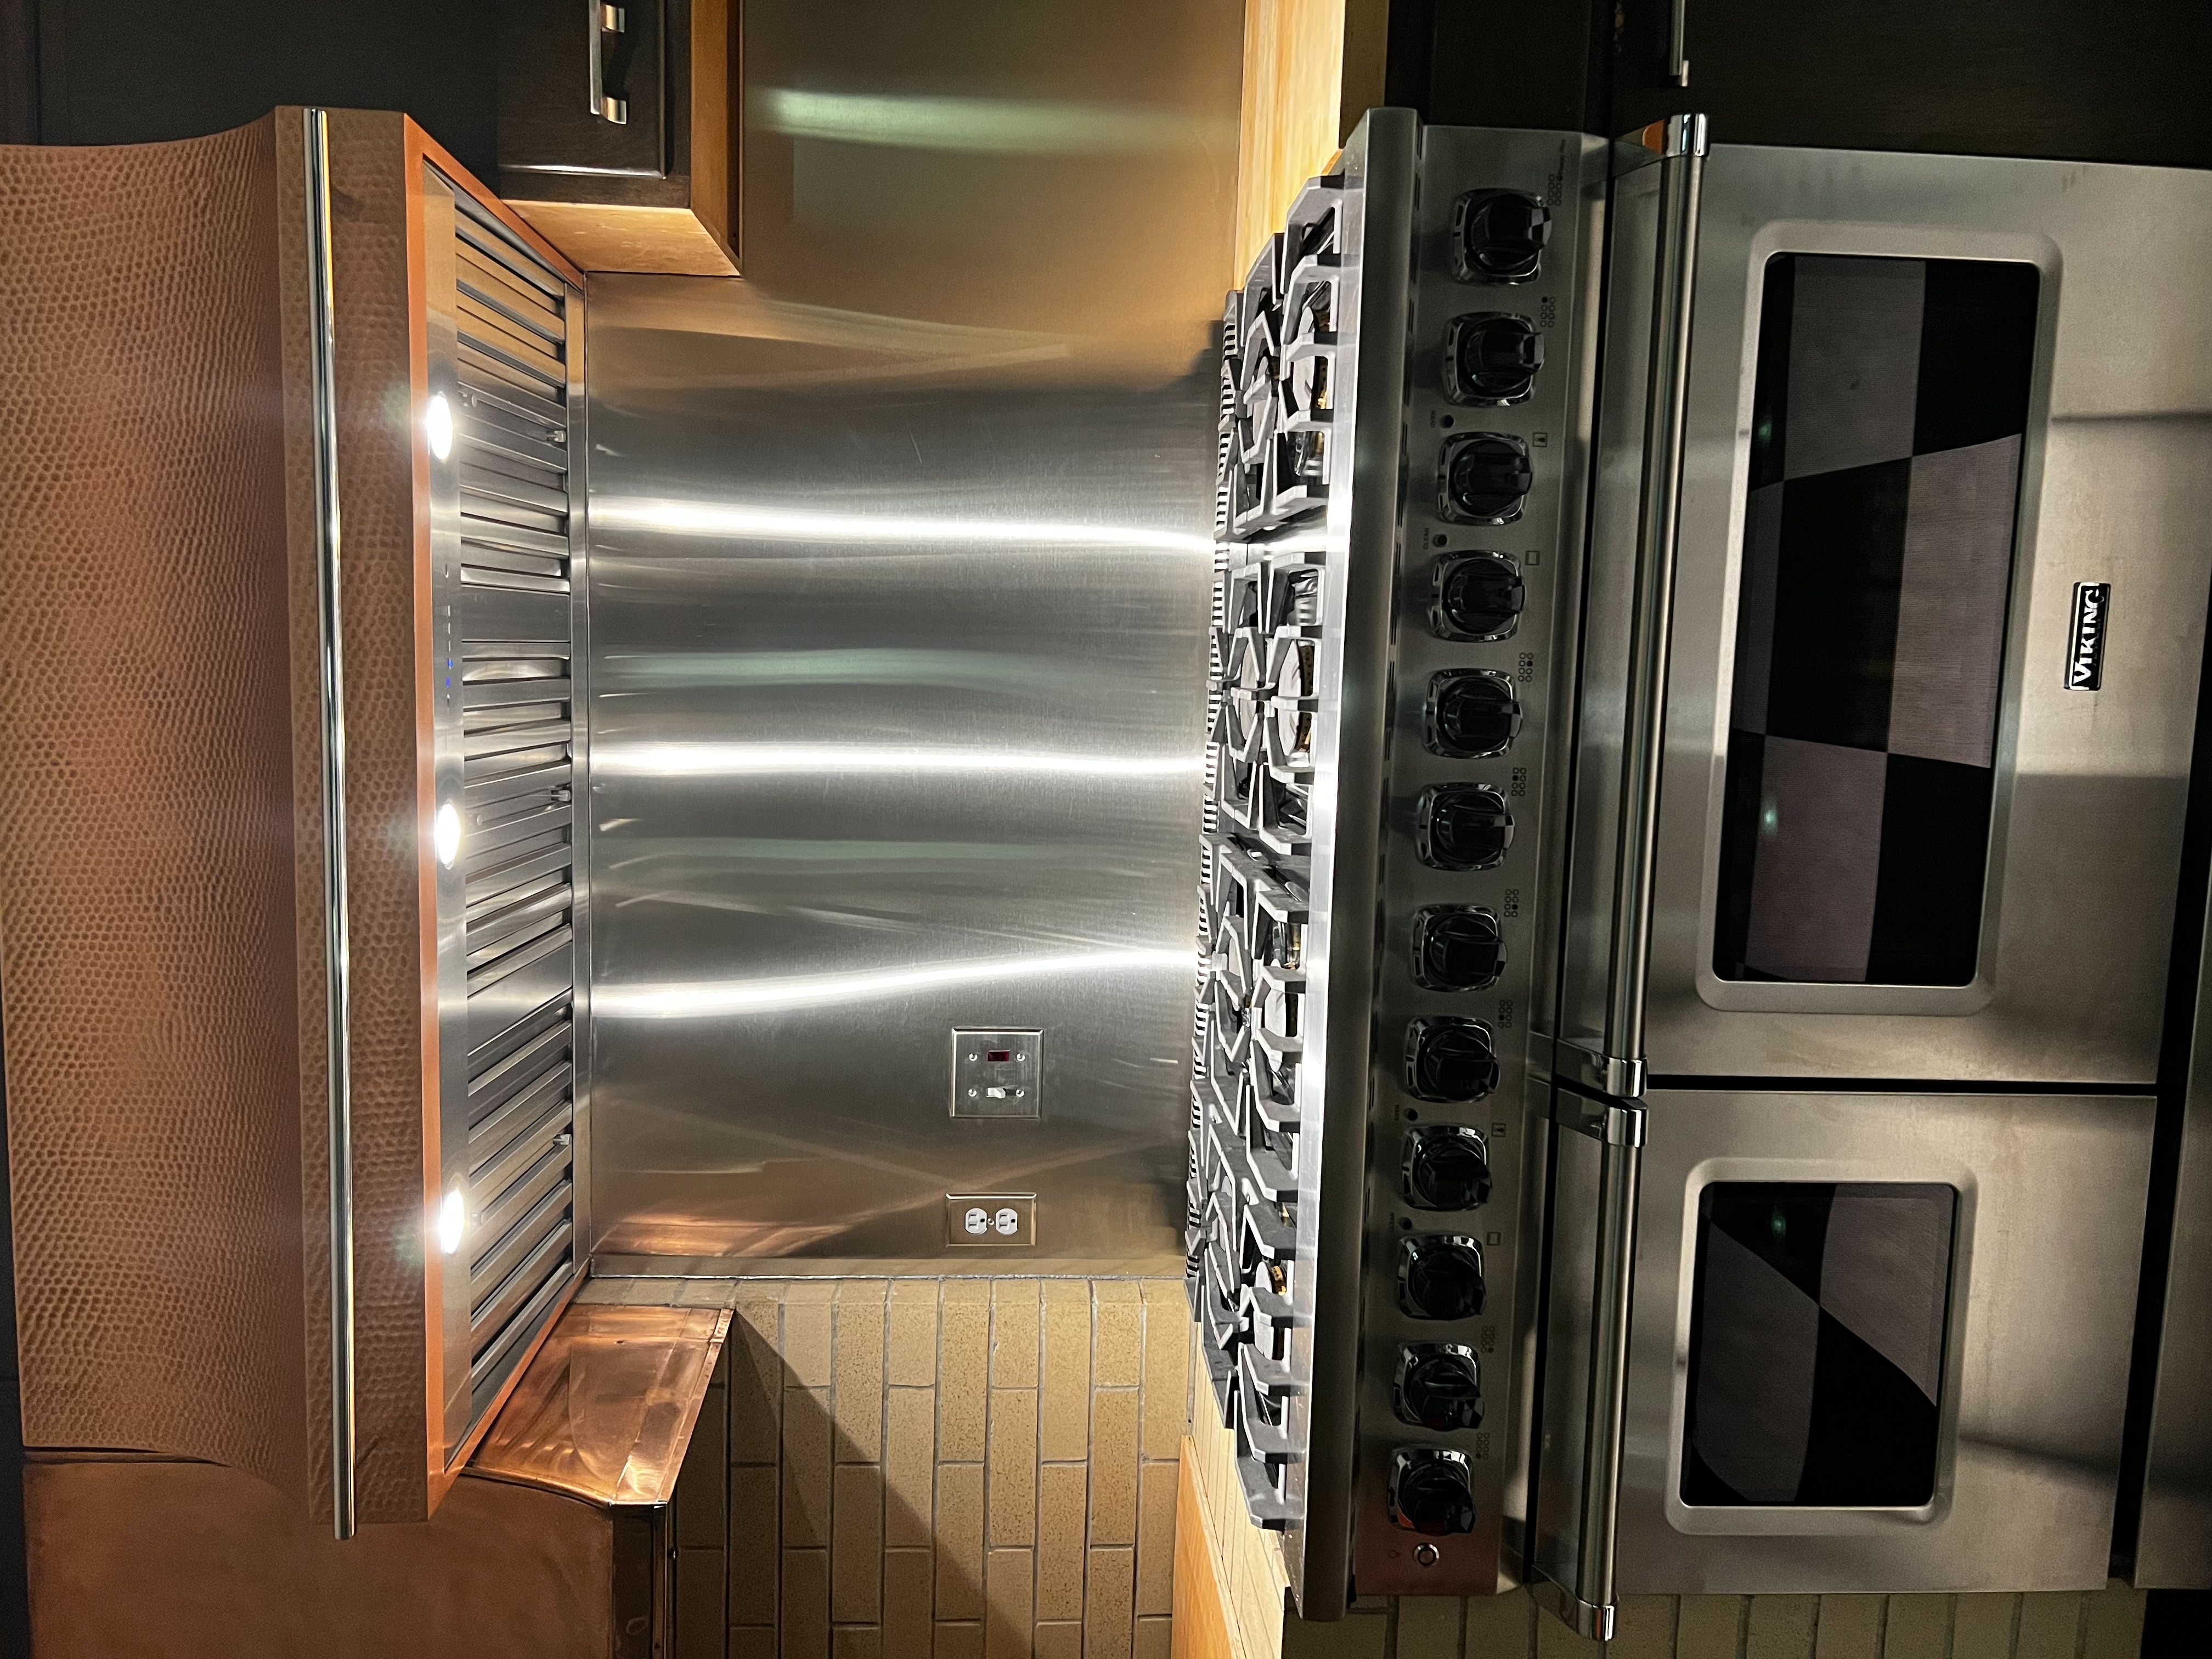 A coastal kitchen project with stylish range hood brown kitchen cabinets, stone kitchen countertops, metal backsplash